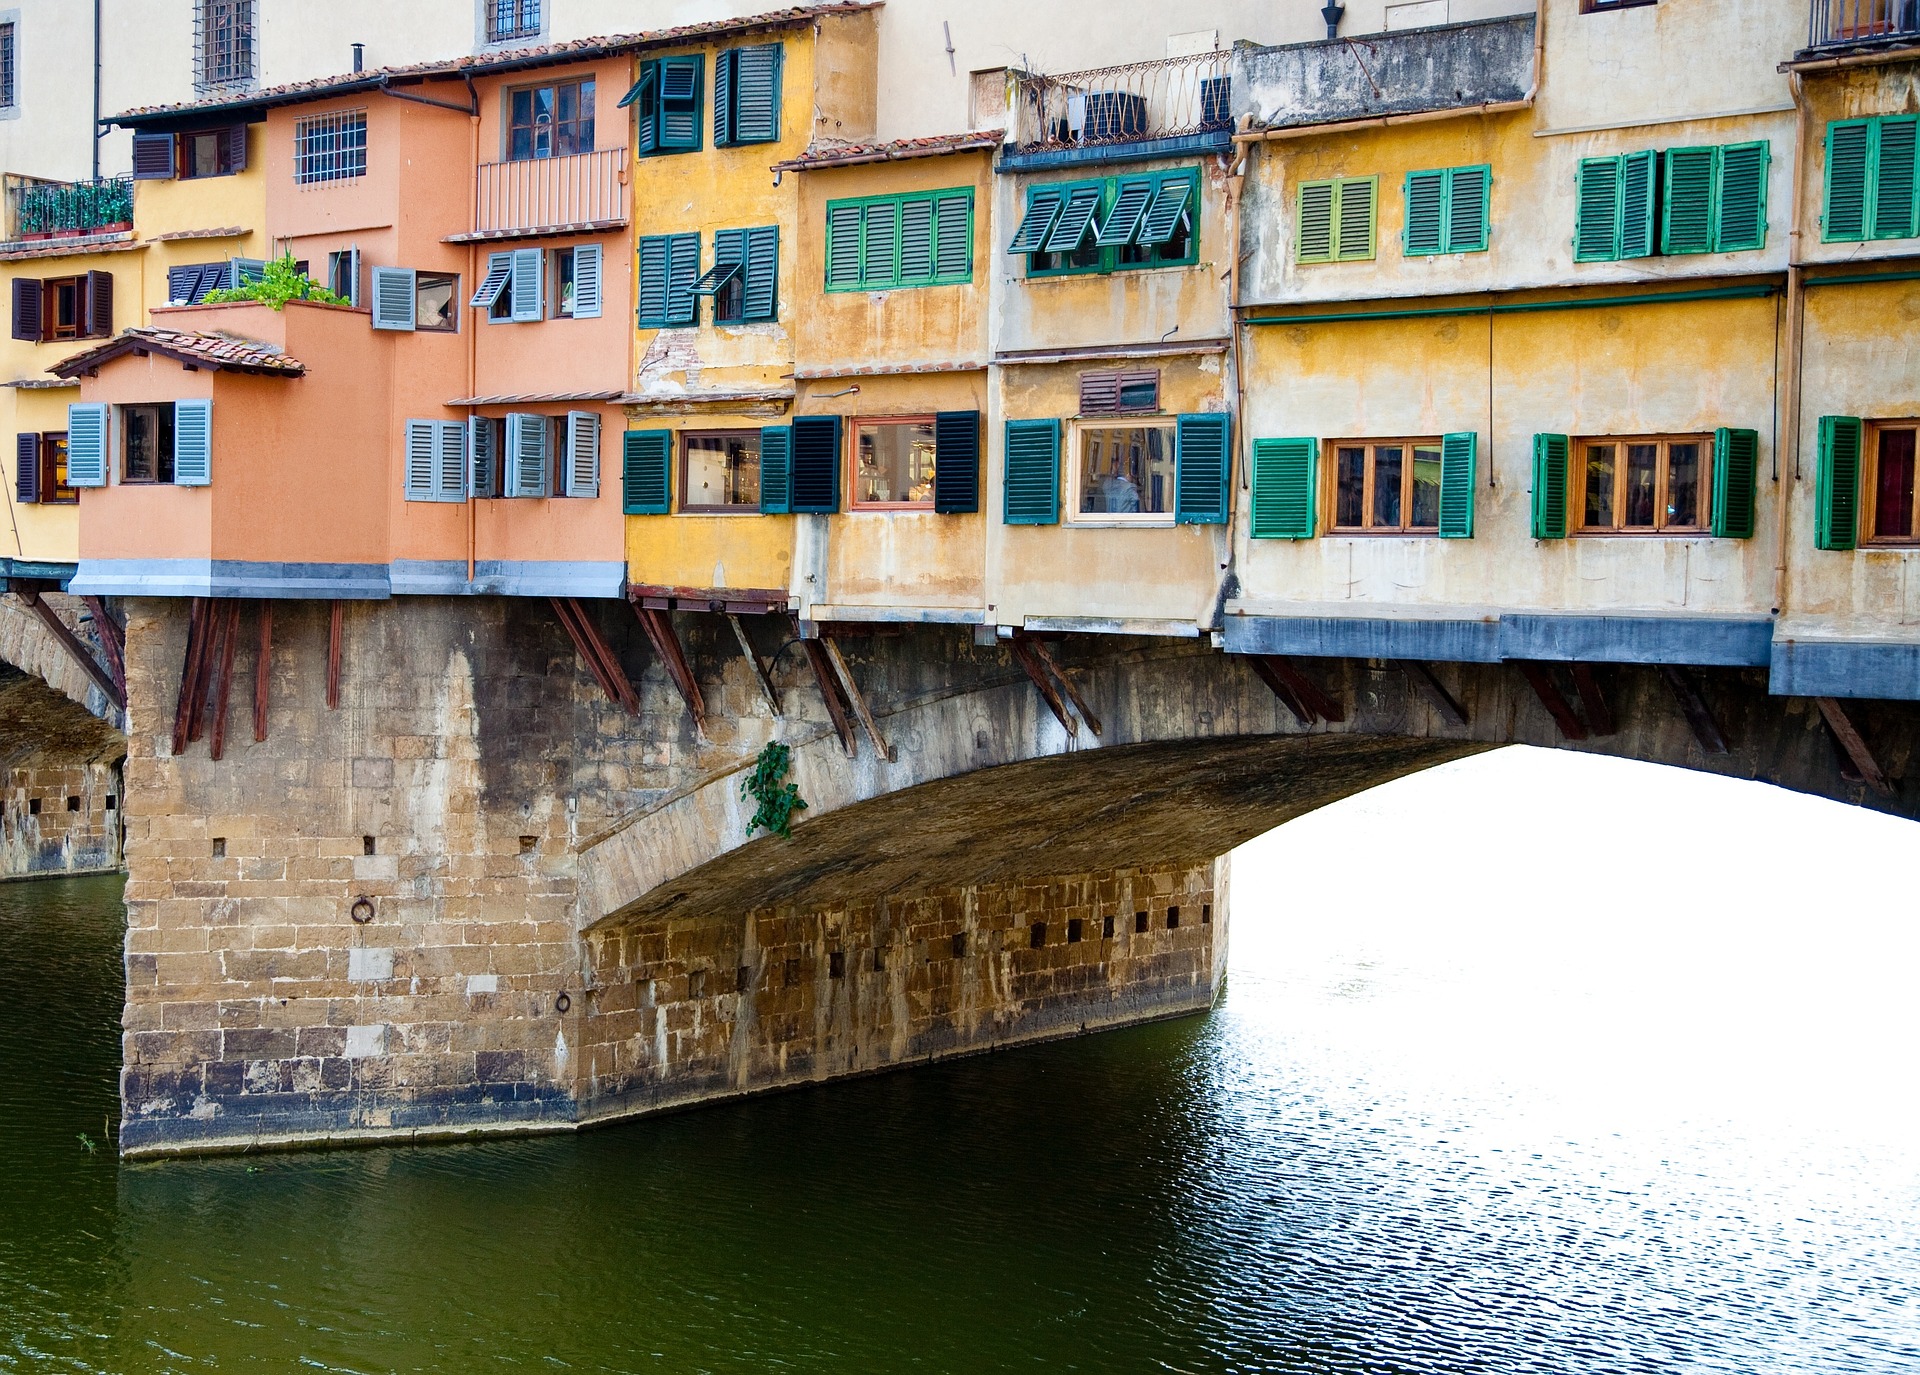 Ponte Vecchio, Closed-spandrel arch bridge in Florence, Italy